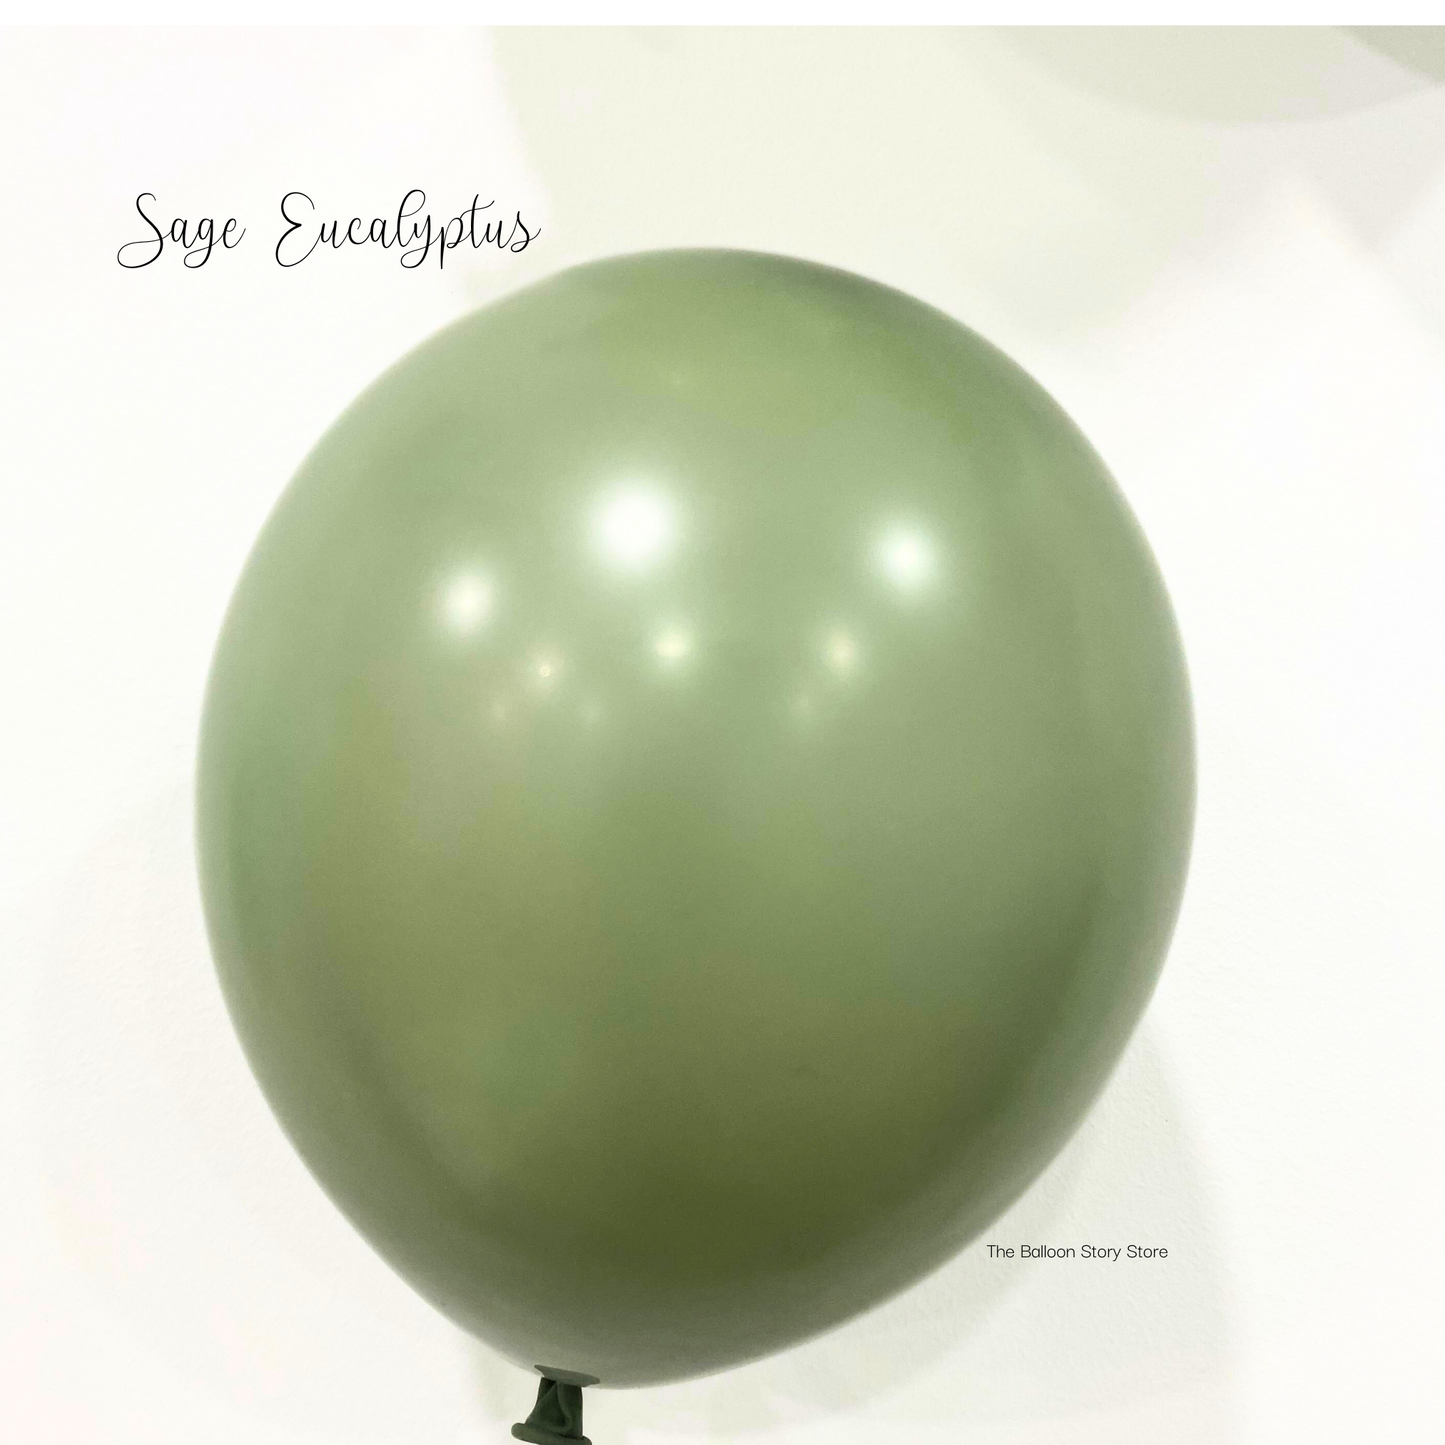 Eucalyptus/Sage  Matte Latex Balloon